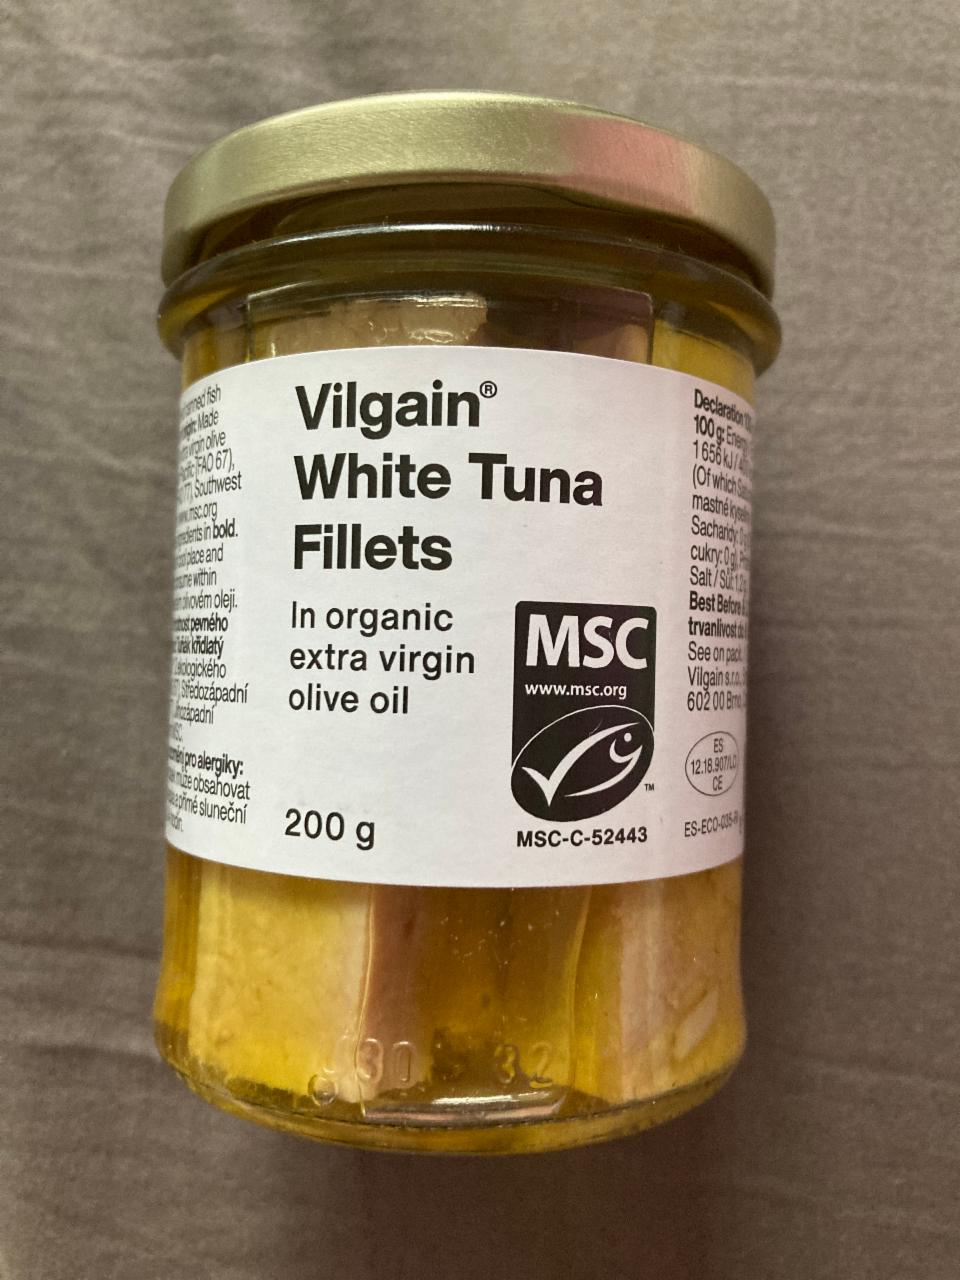 Fotografie - White Tuna Fillets In organic extra virgin olive oil Vilgain